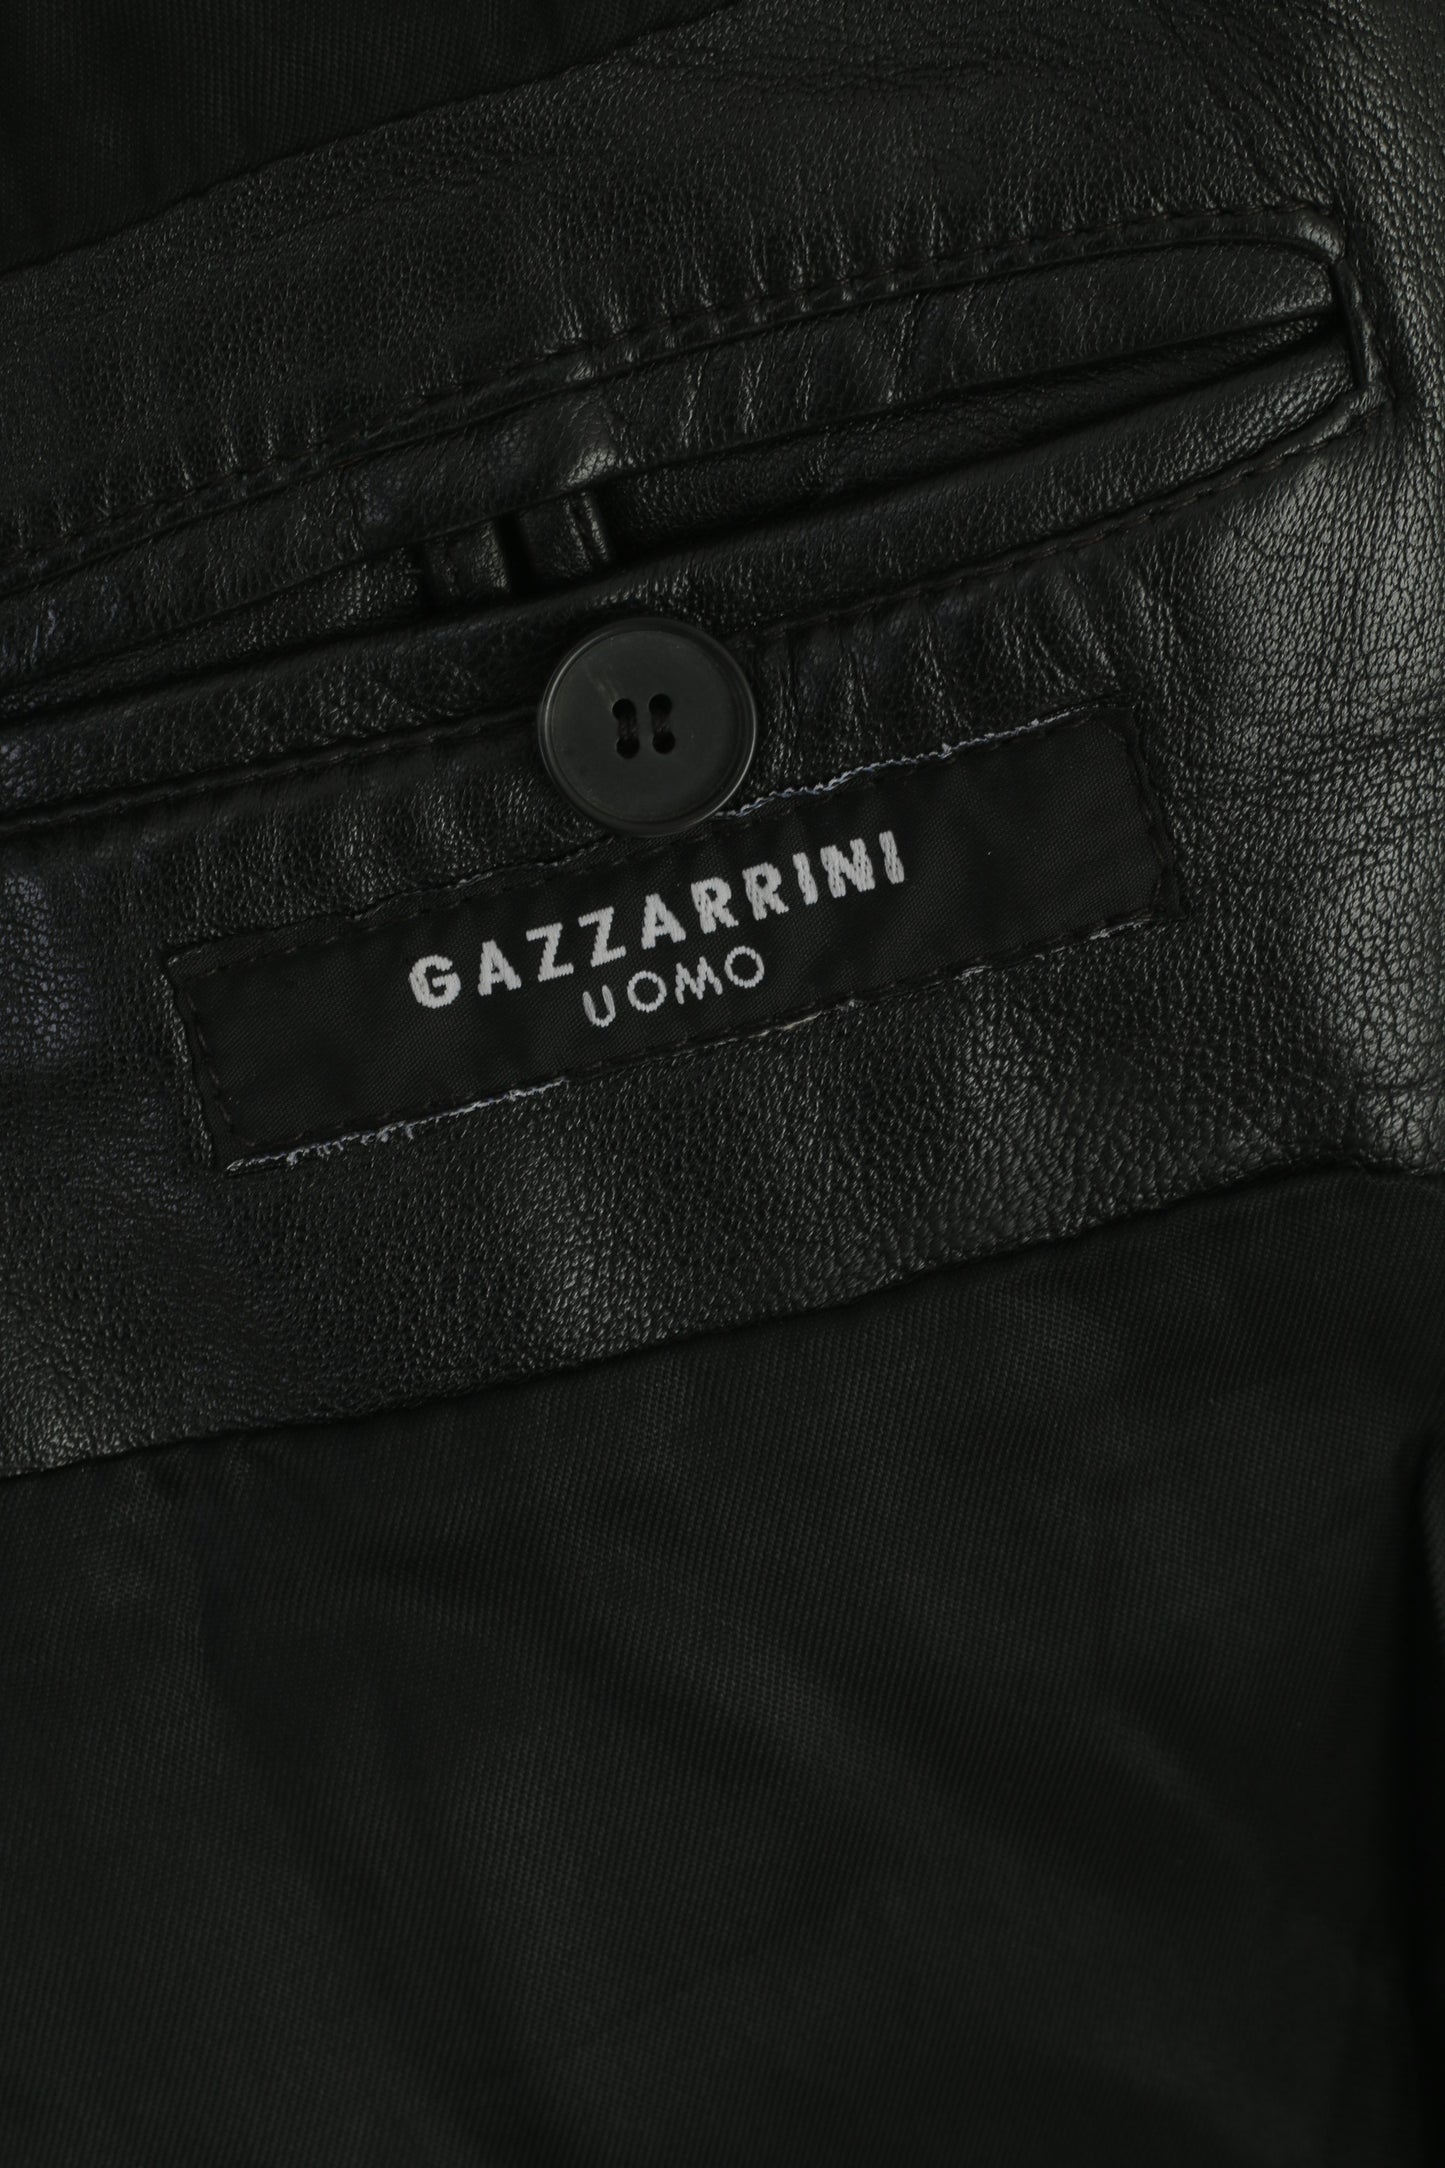 Gazzarrini Uomo Men 52 M Jacket Black Leather Soft Single Breasted Vintage Top